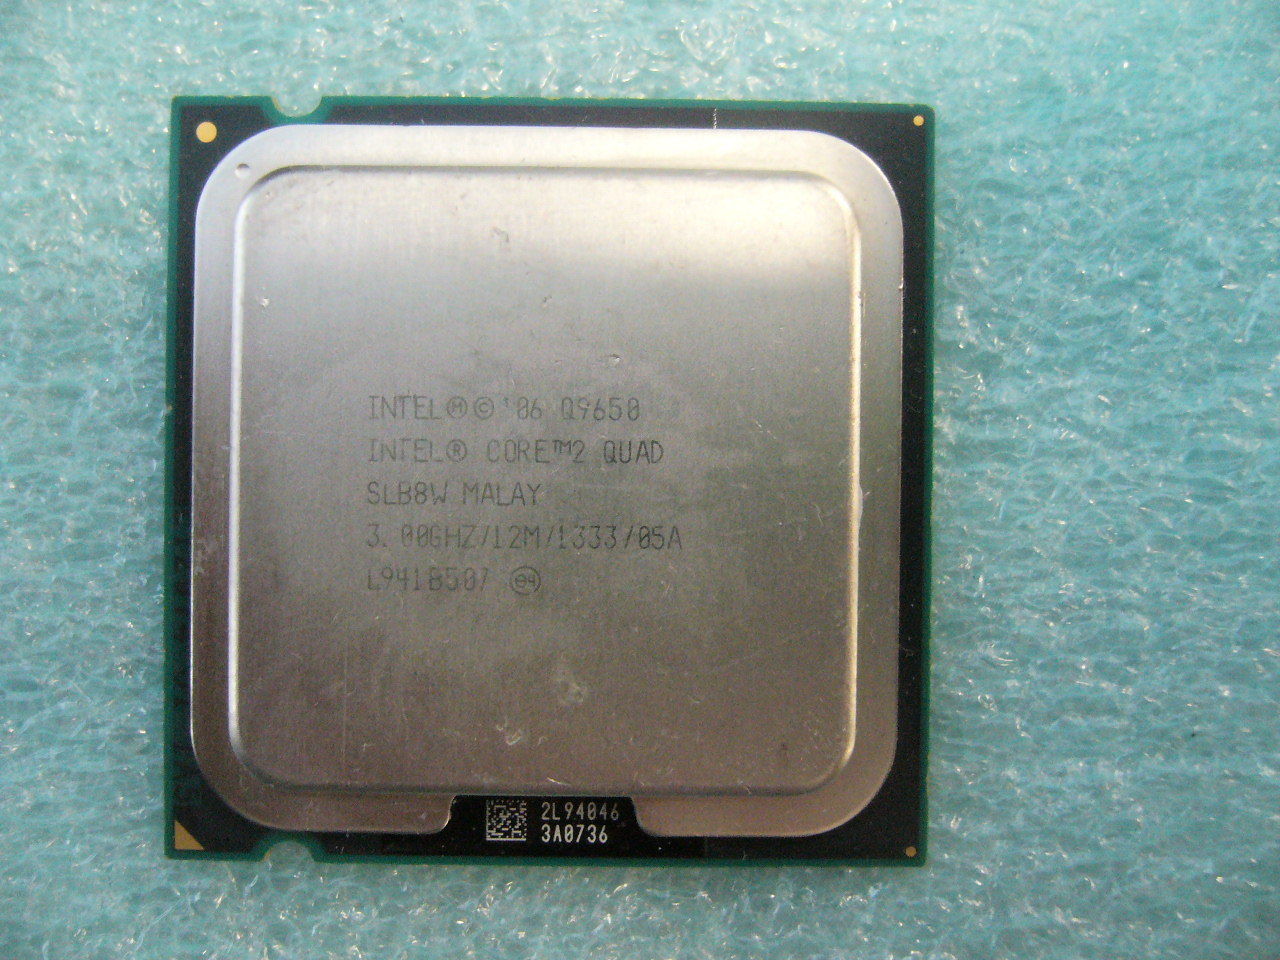 QTY 1x INTEL Core2 Quad Q9650 CPU 3.00GHz/12MB/1333Mhz LGA775 SLB8W - zum Schließen ins Bild klicken